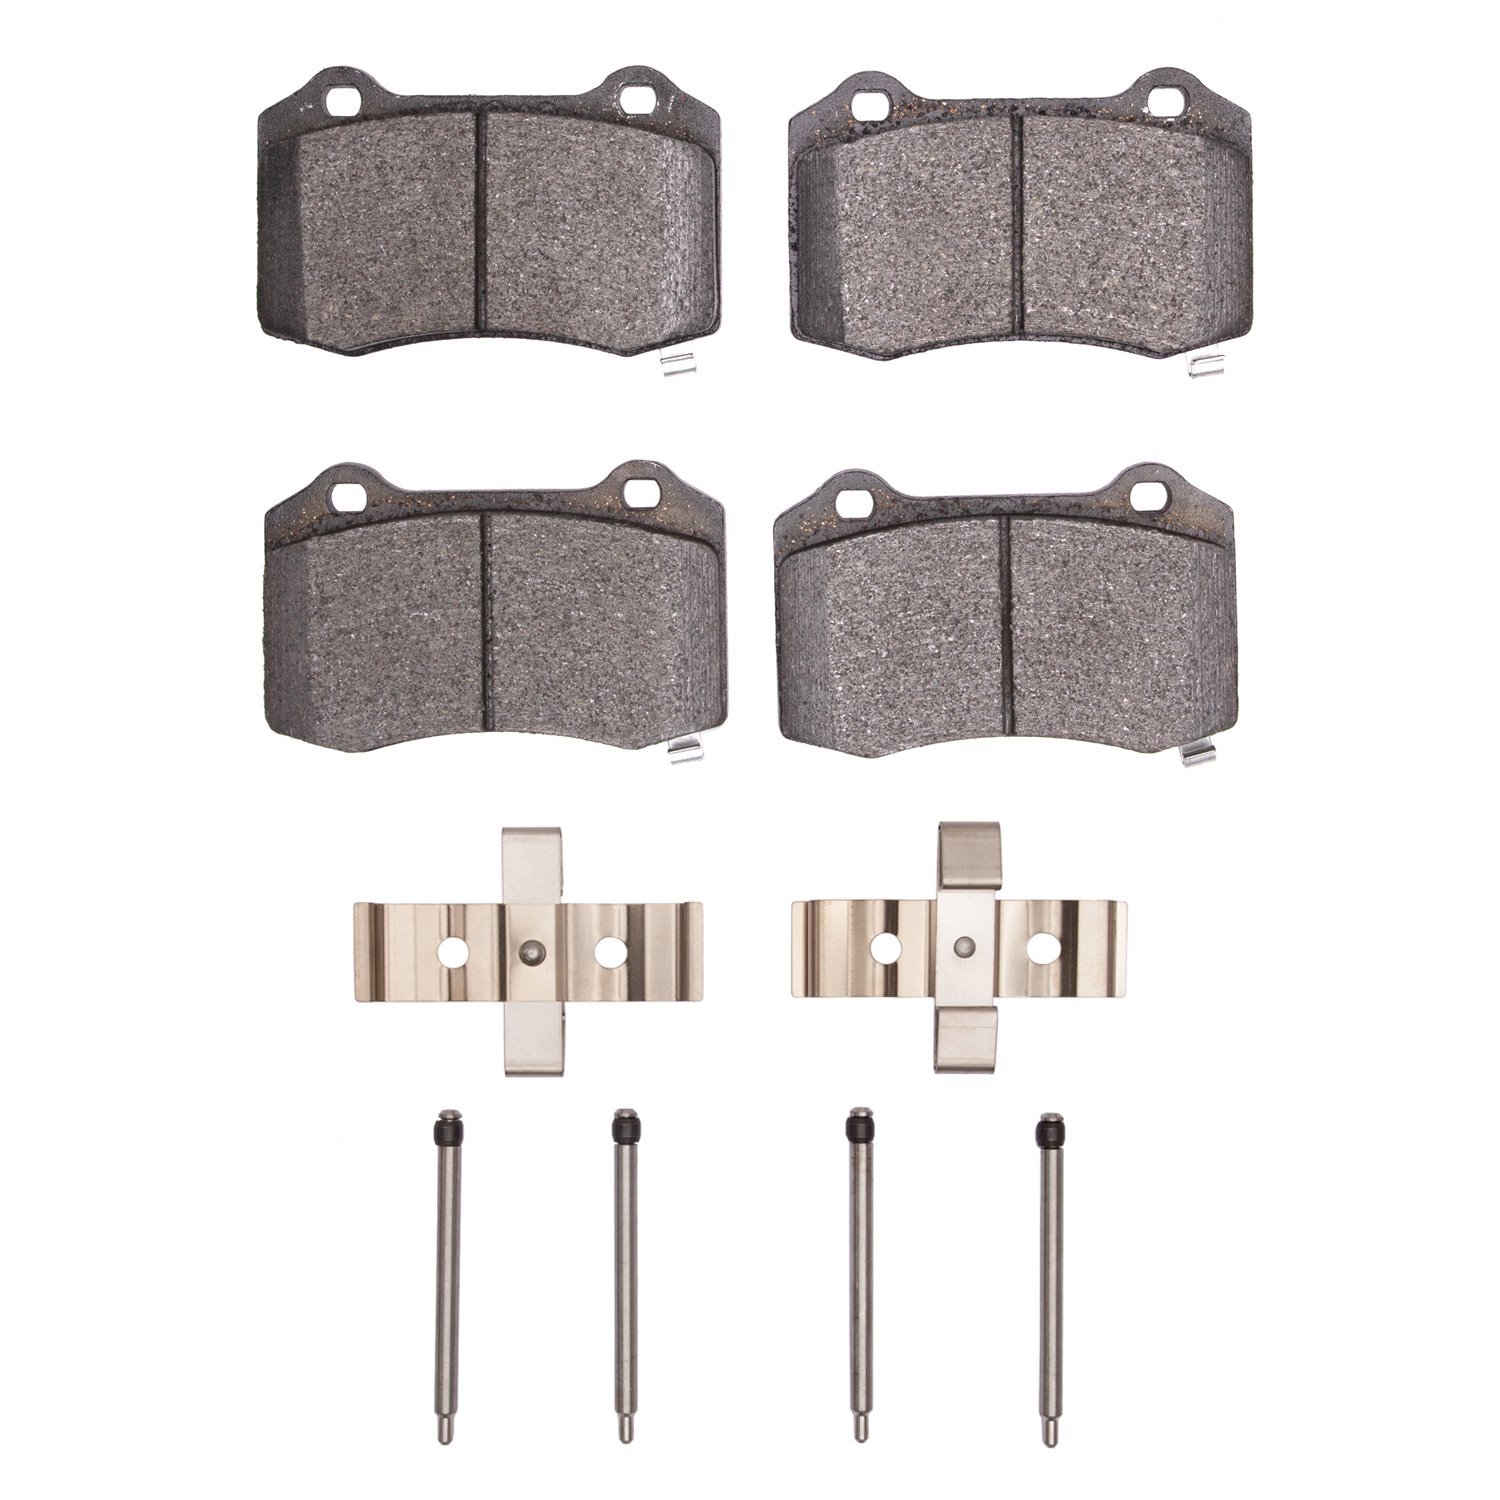 1600-1053-01 5000 Euro Ceramic Brake Pads & Hardware Kit, Fits Select Multiple Makes/Models, Position: Rear